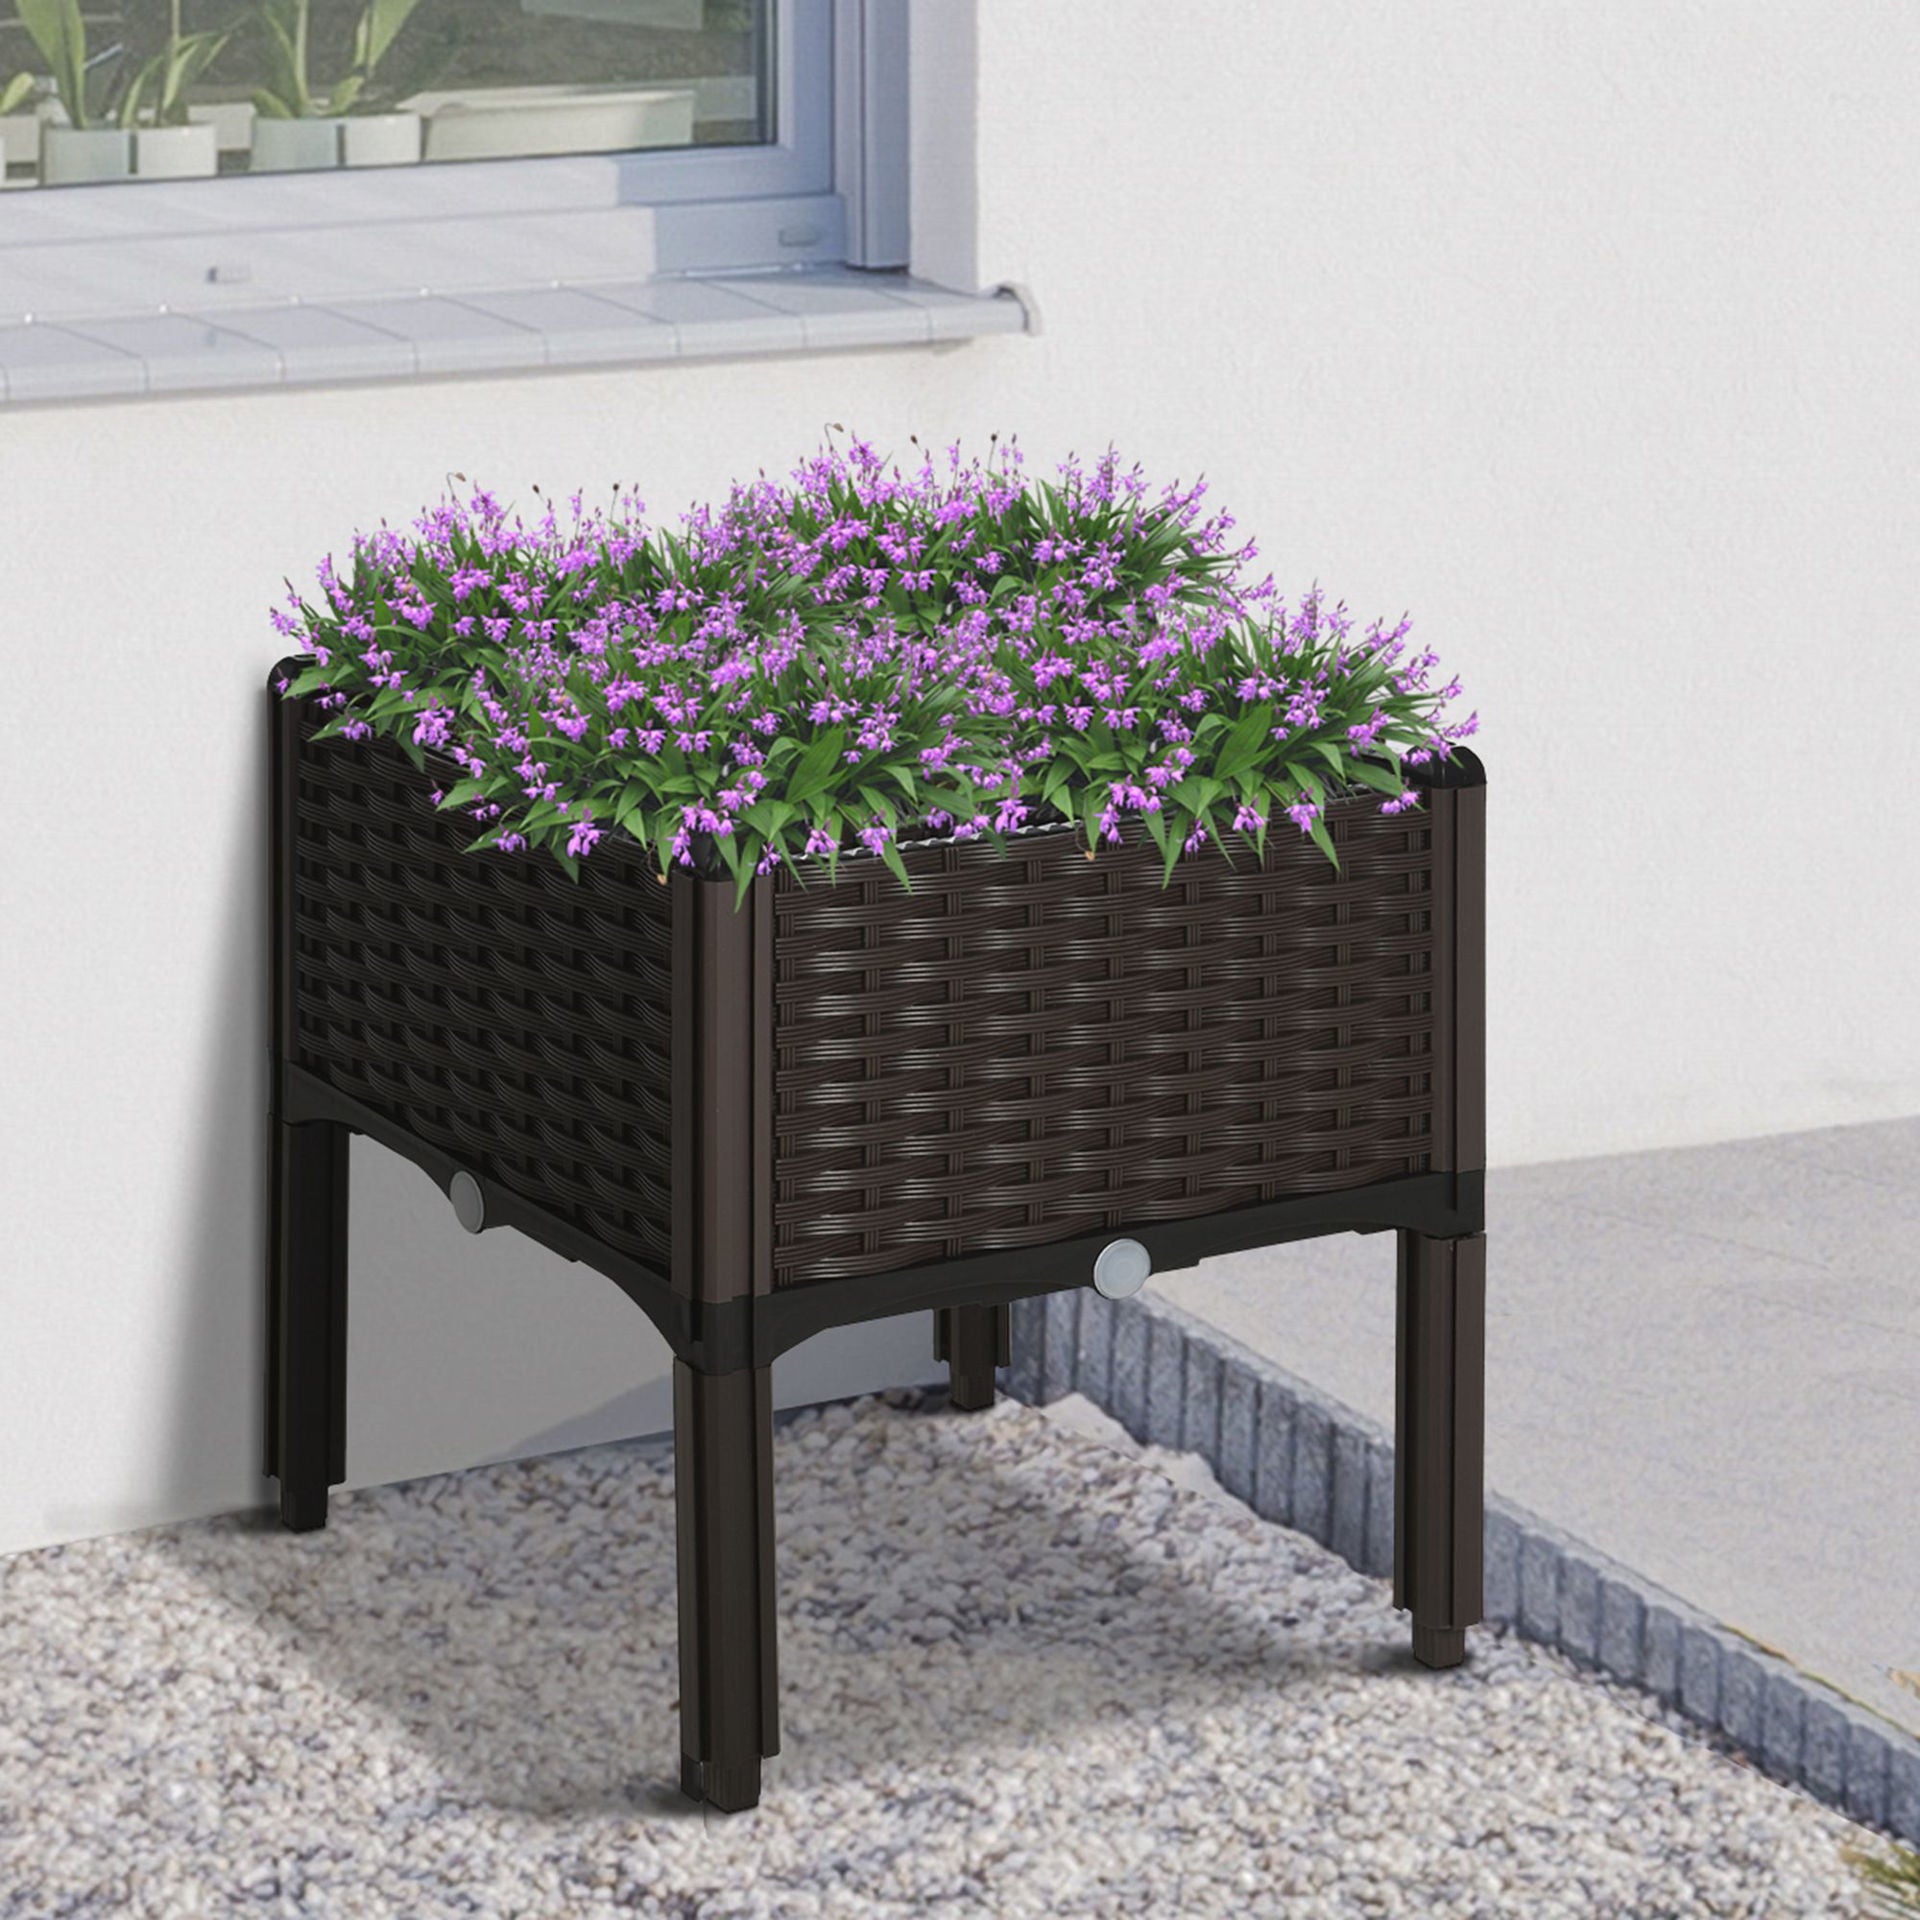 Nancy's Antoine Garden Bed Raised Bed Planter - Dark Brown - Pp - 15.75 cm x 15.75 cm x 17.32 cm